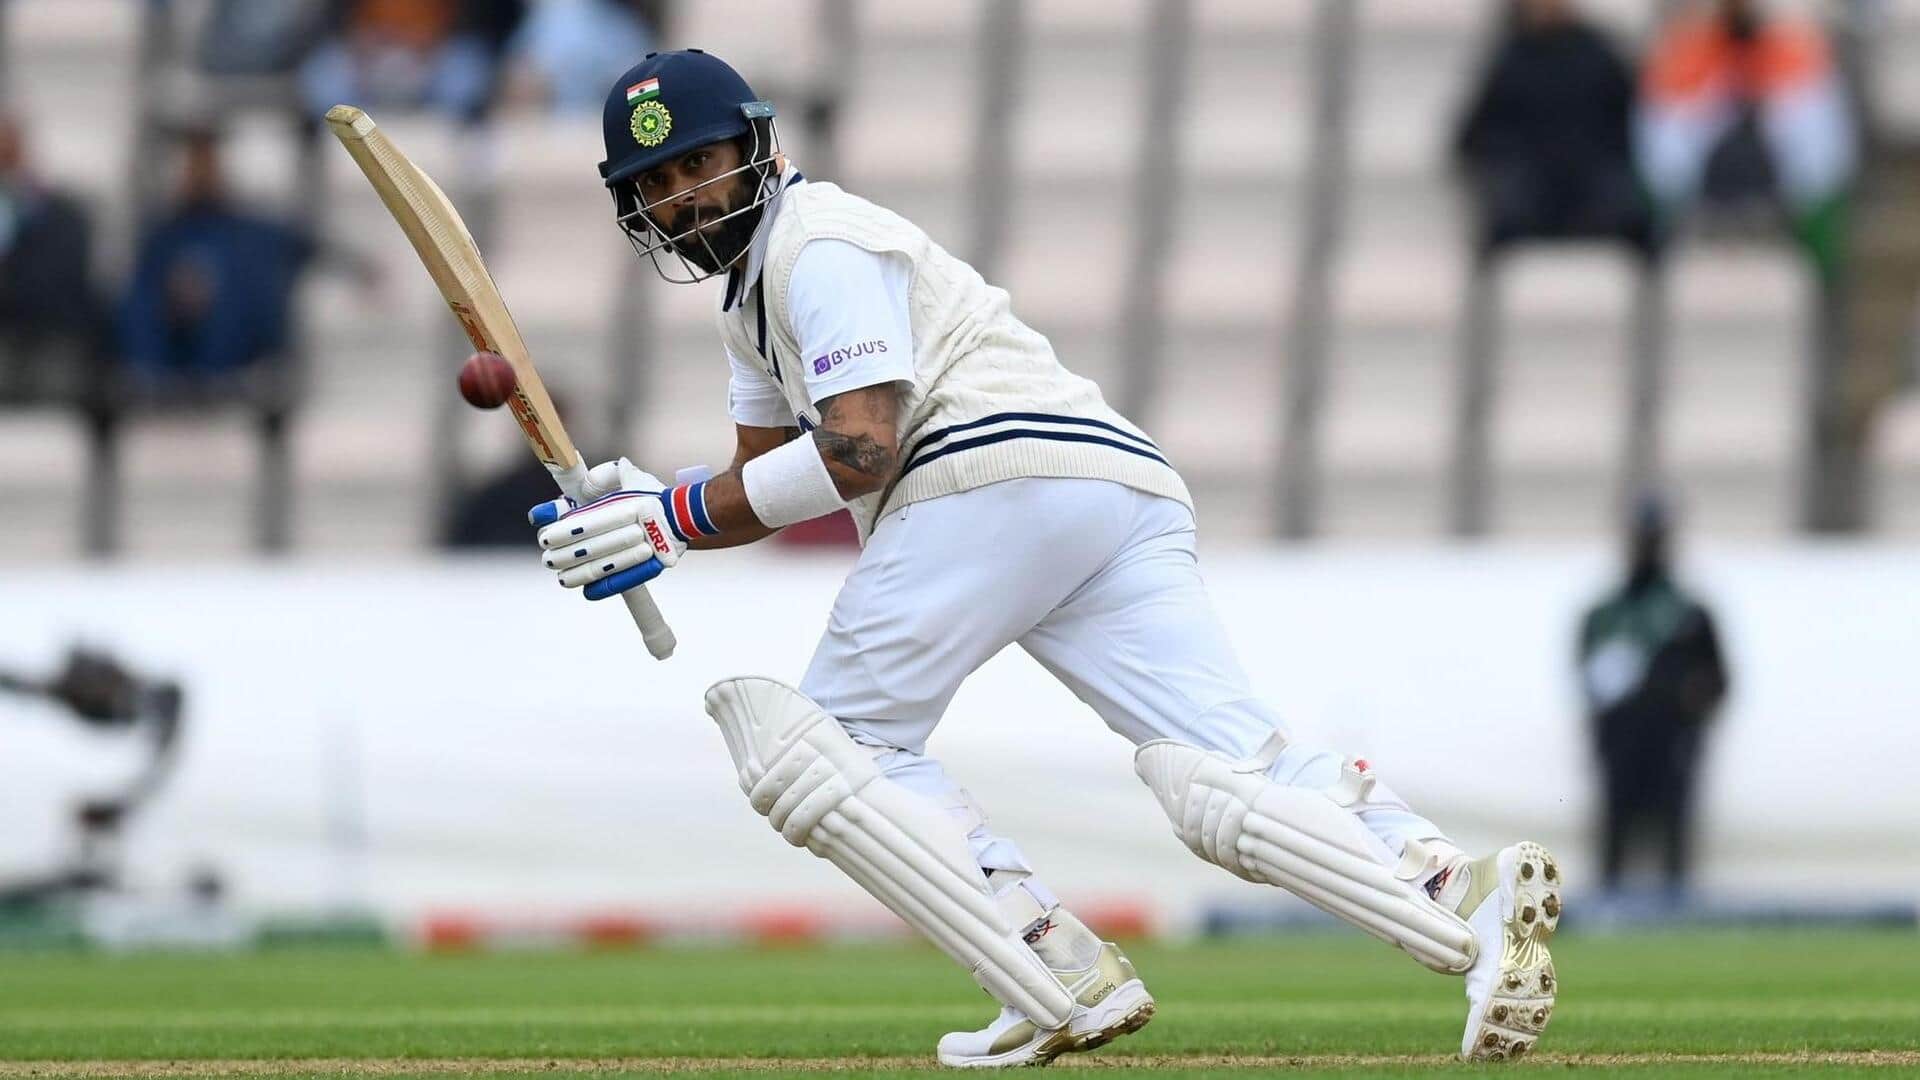 Virat Kohli surpasses Sehwag's runs tally for India in Tests